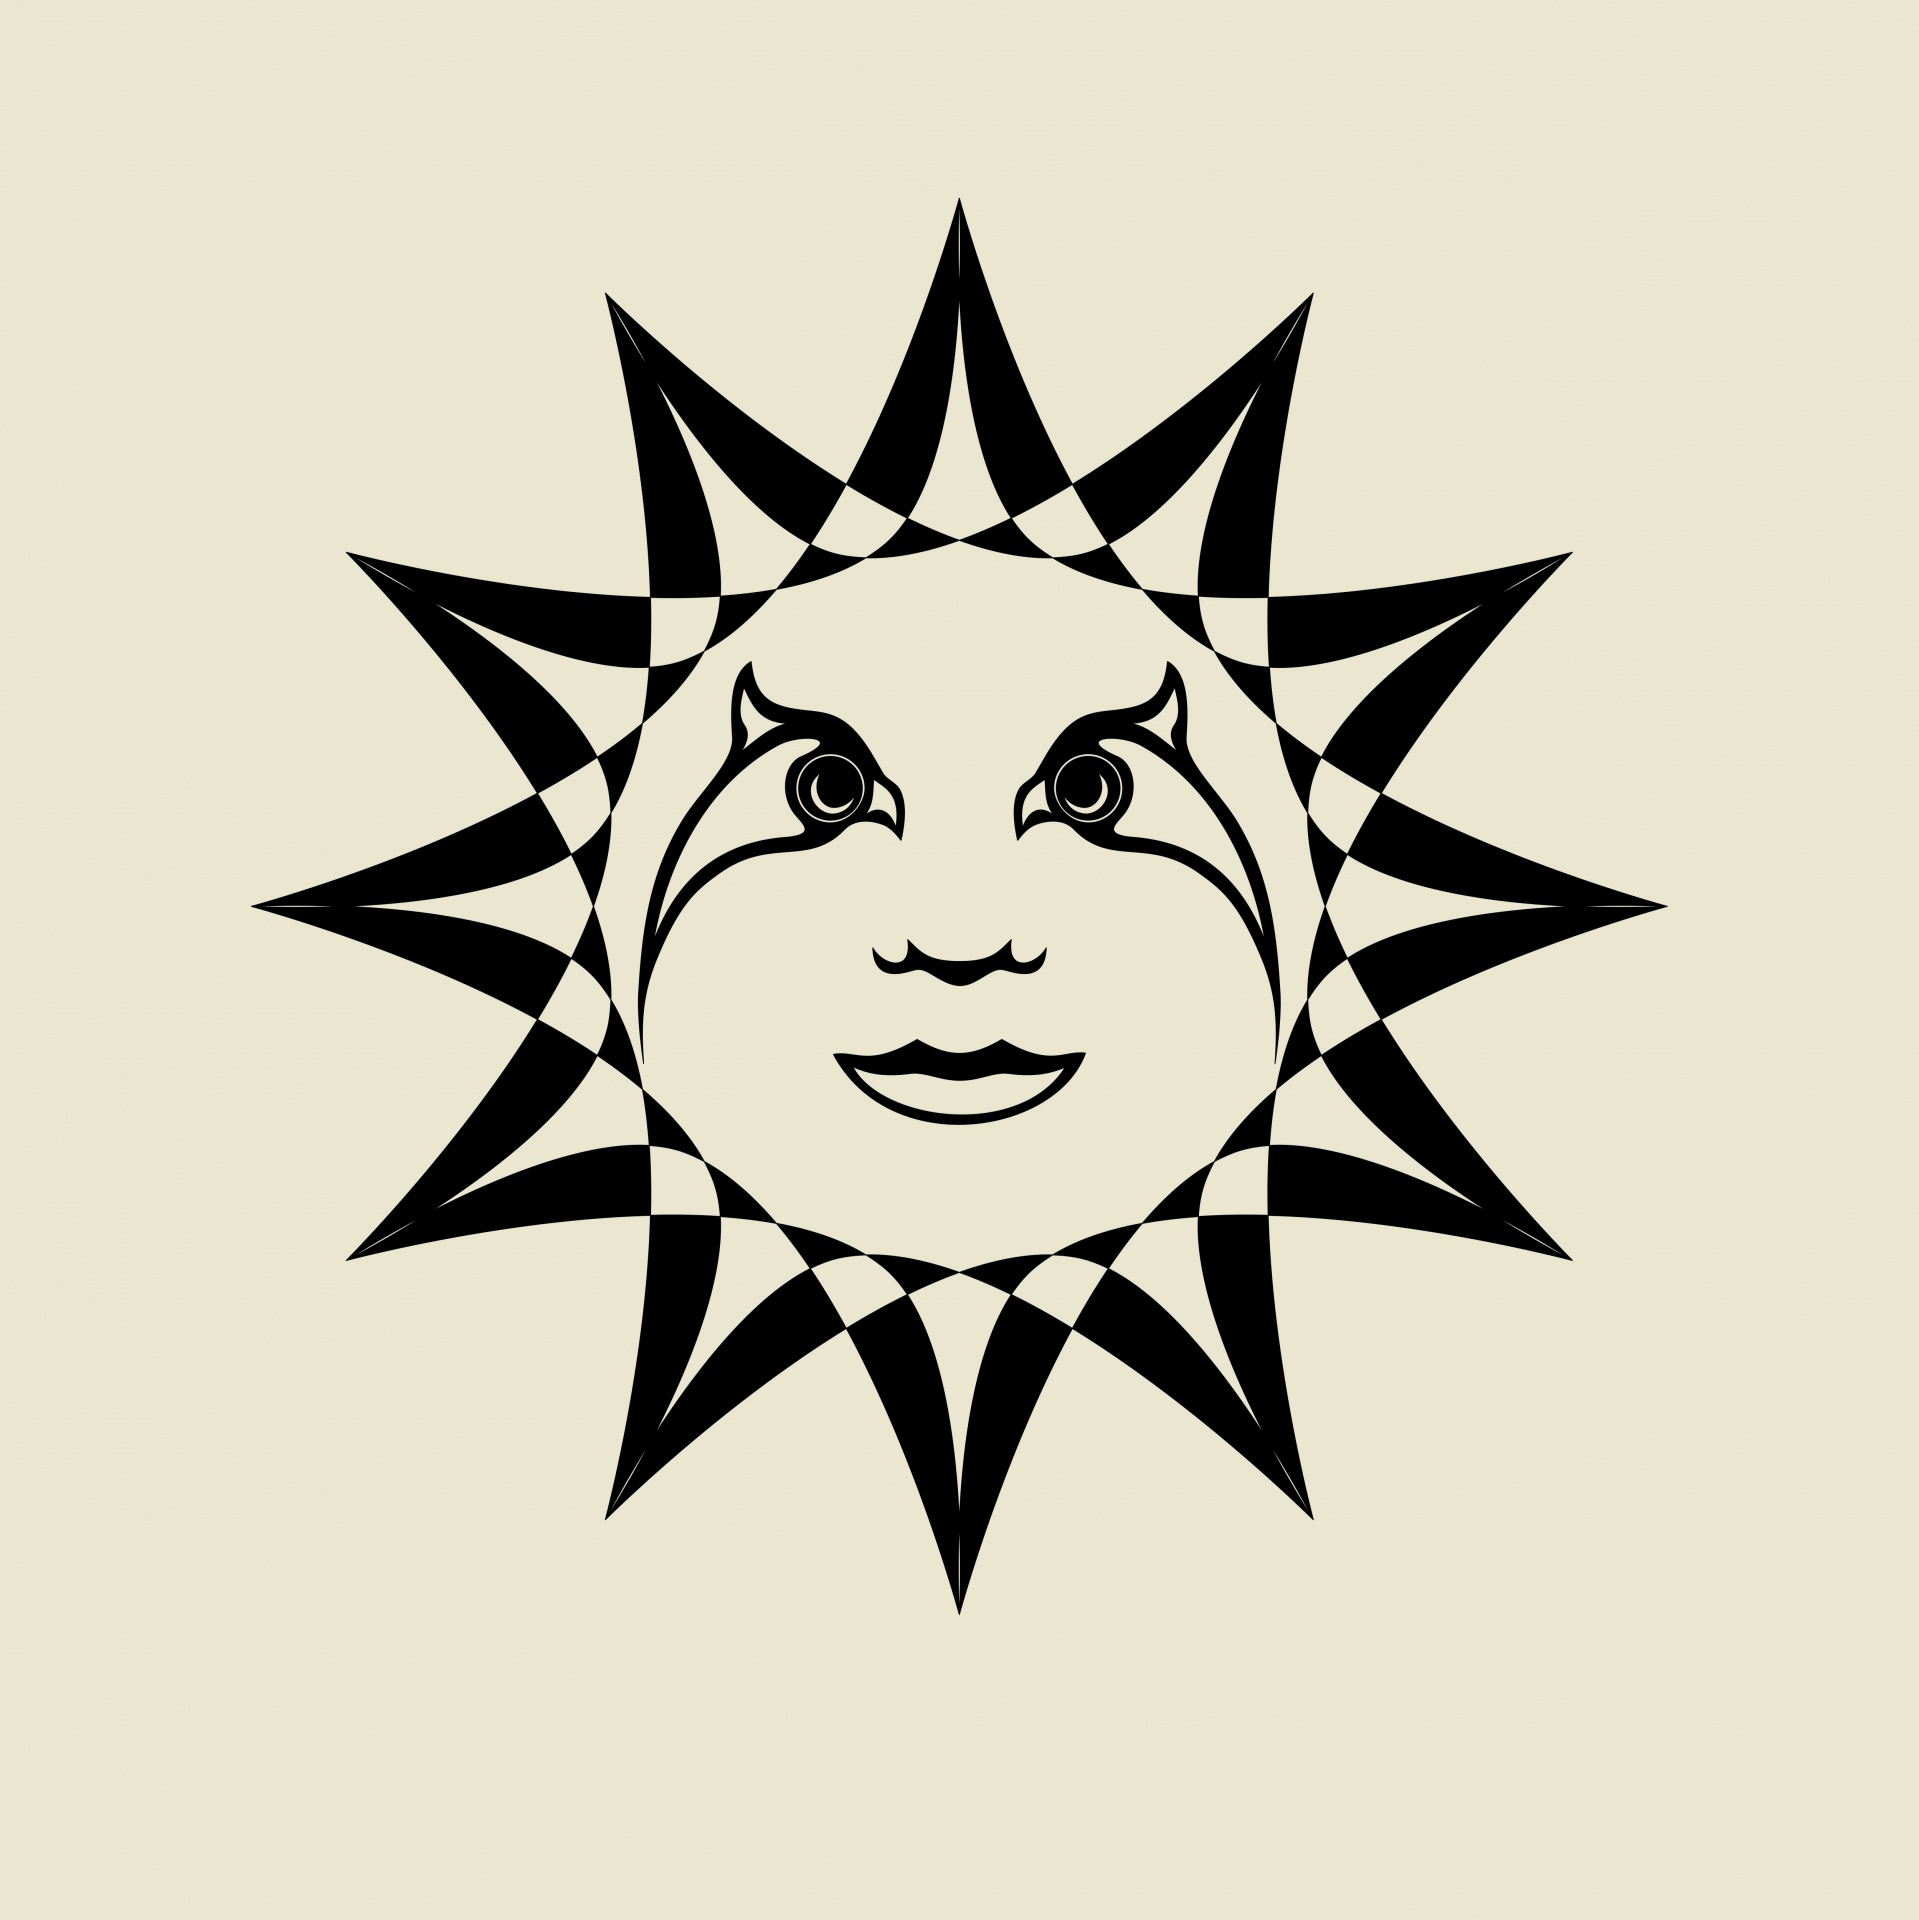 Drawn Sun Free Stock Photo - Public Domain Pictures